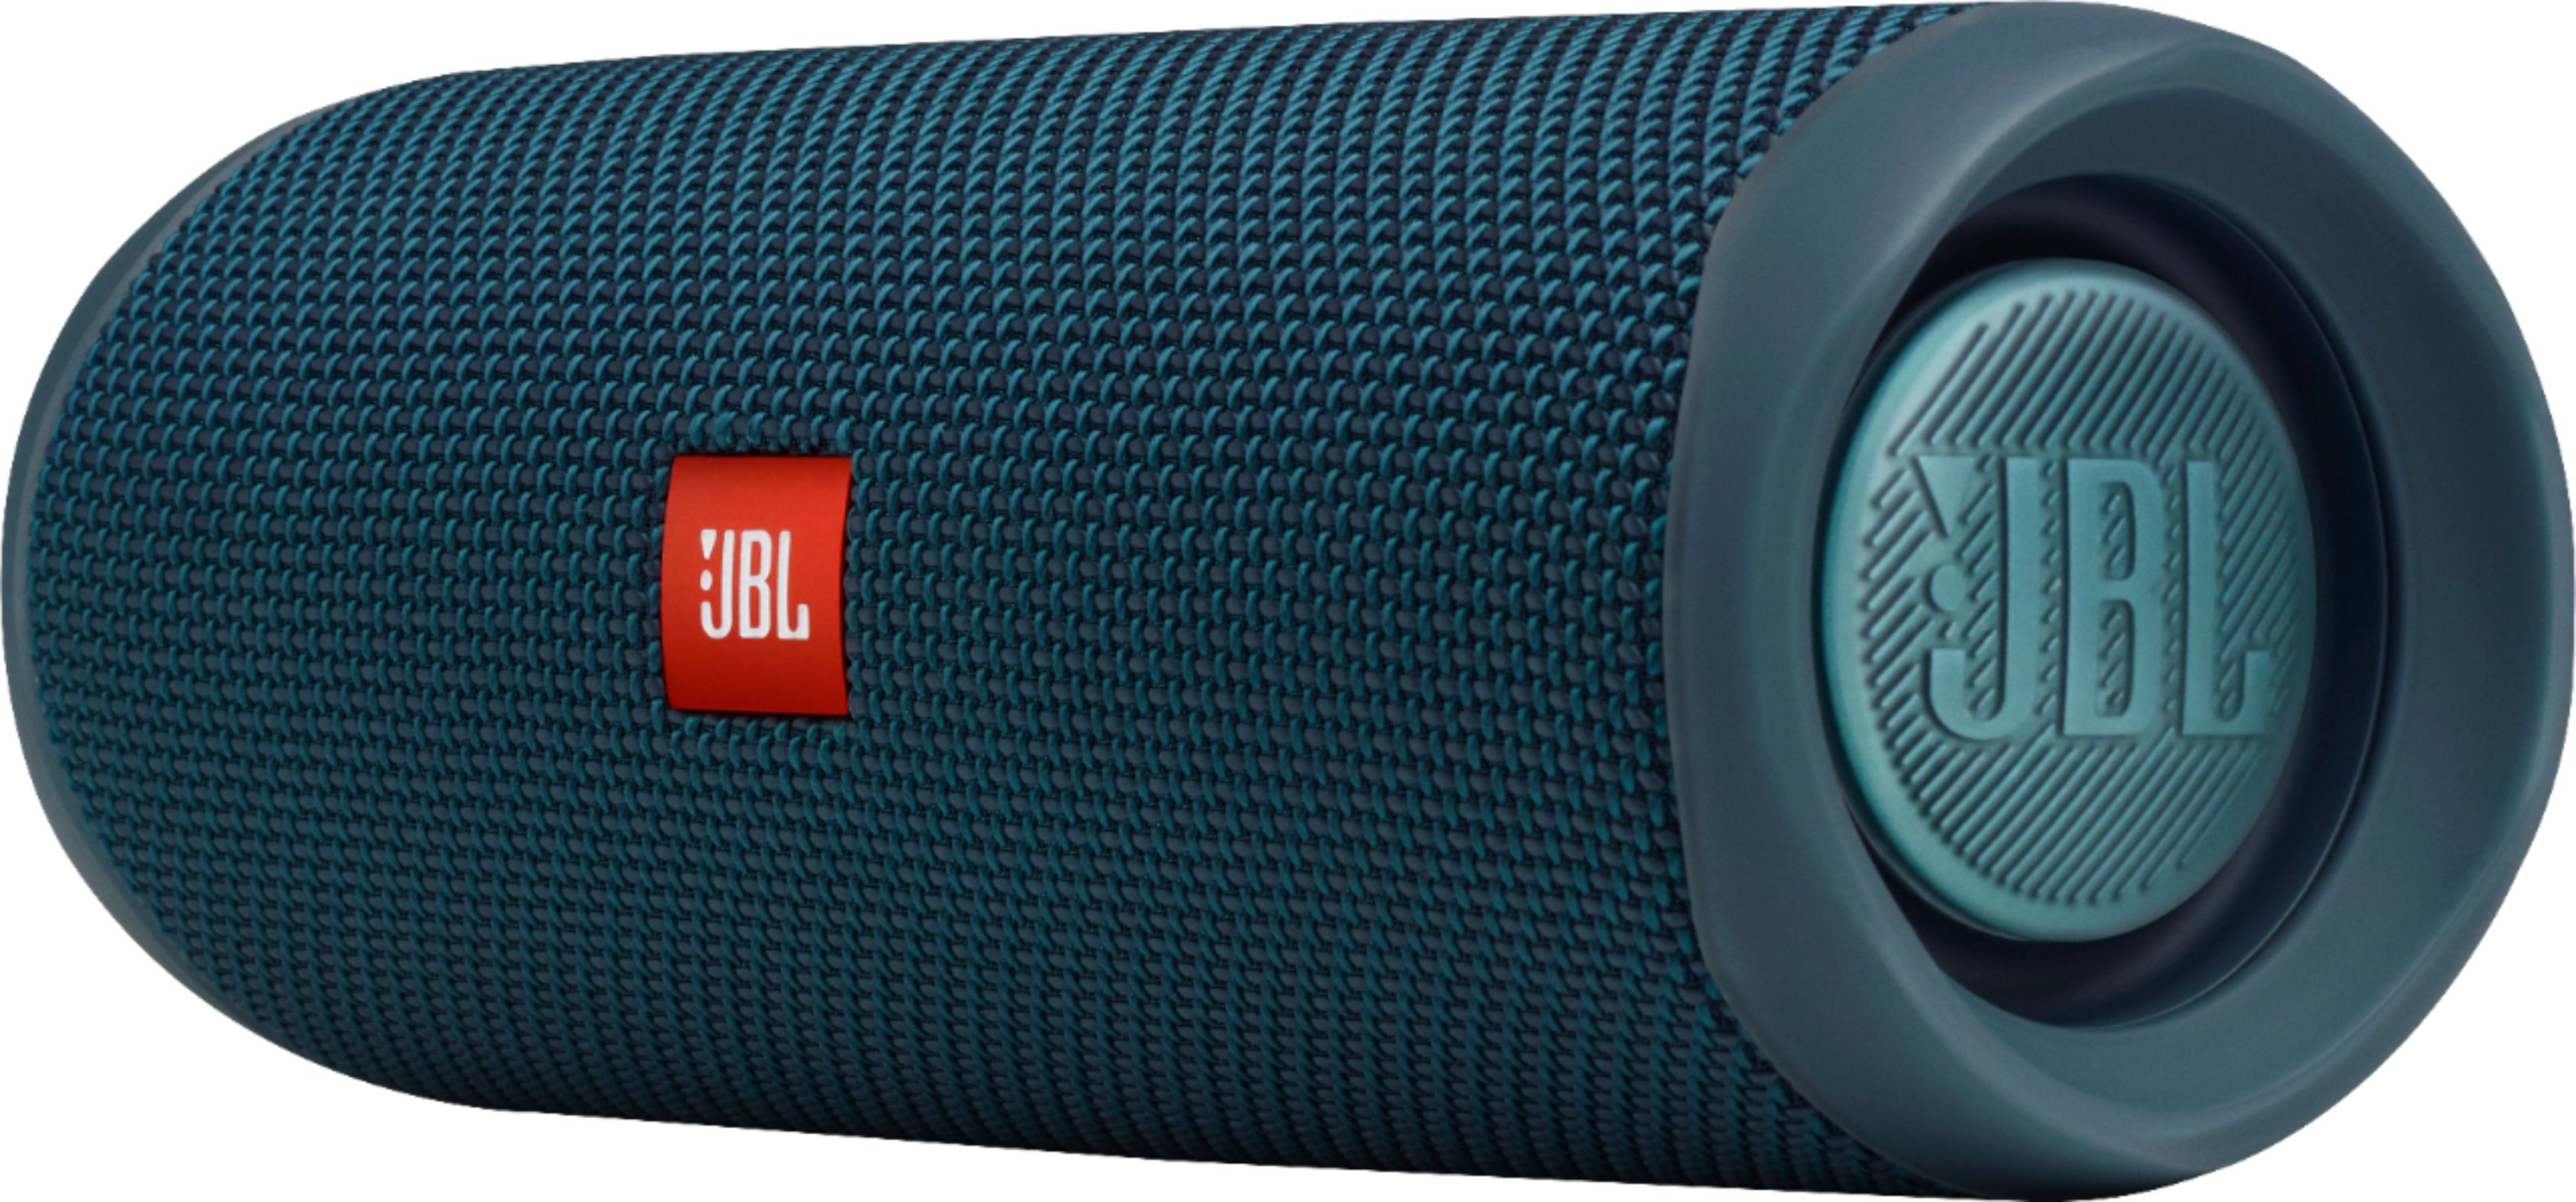 JBL Flip Portable Bluetooth Speaker Ocean Blue JBLFLIP5BLUAM Best Buy